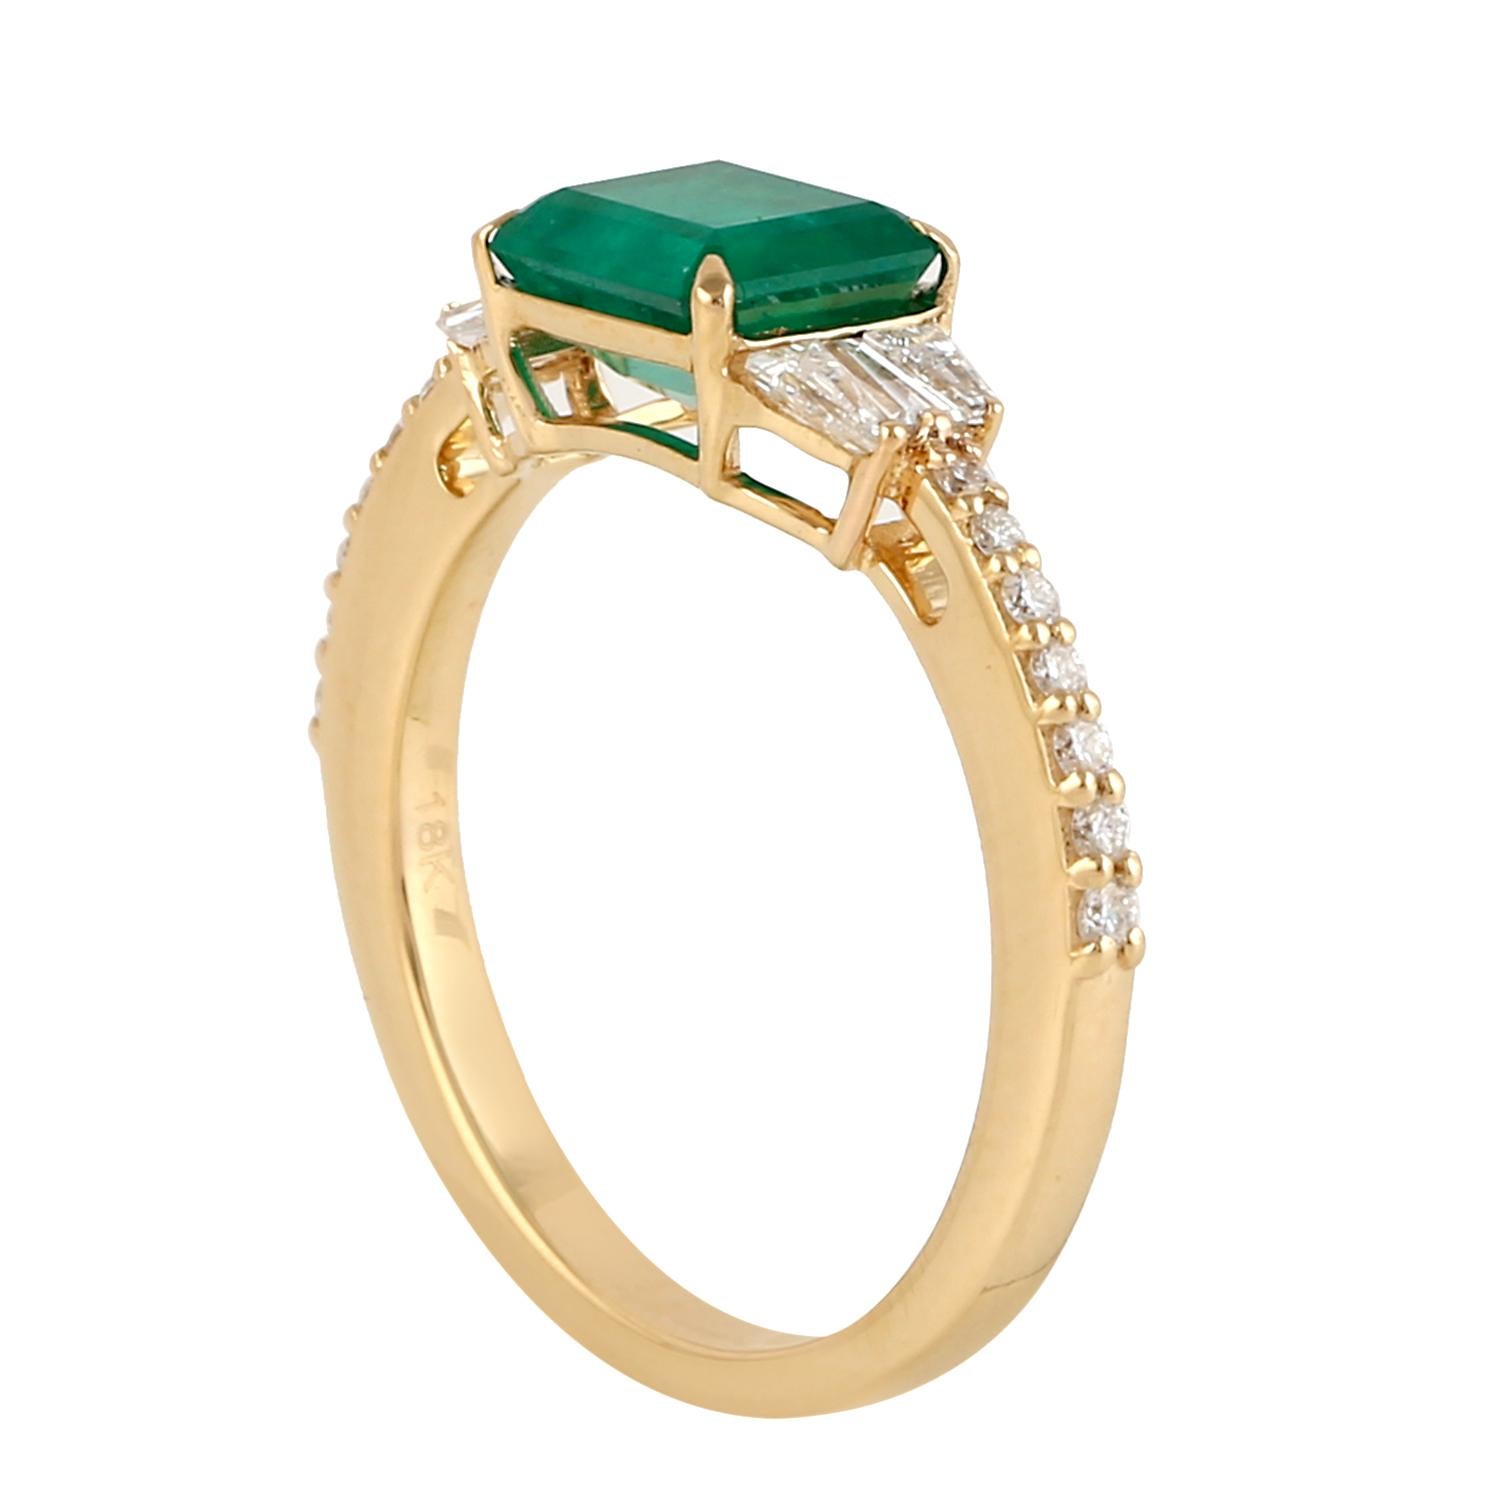 2 carat emerald ring on hand